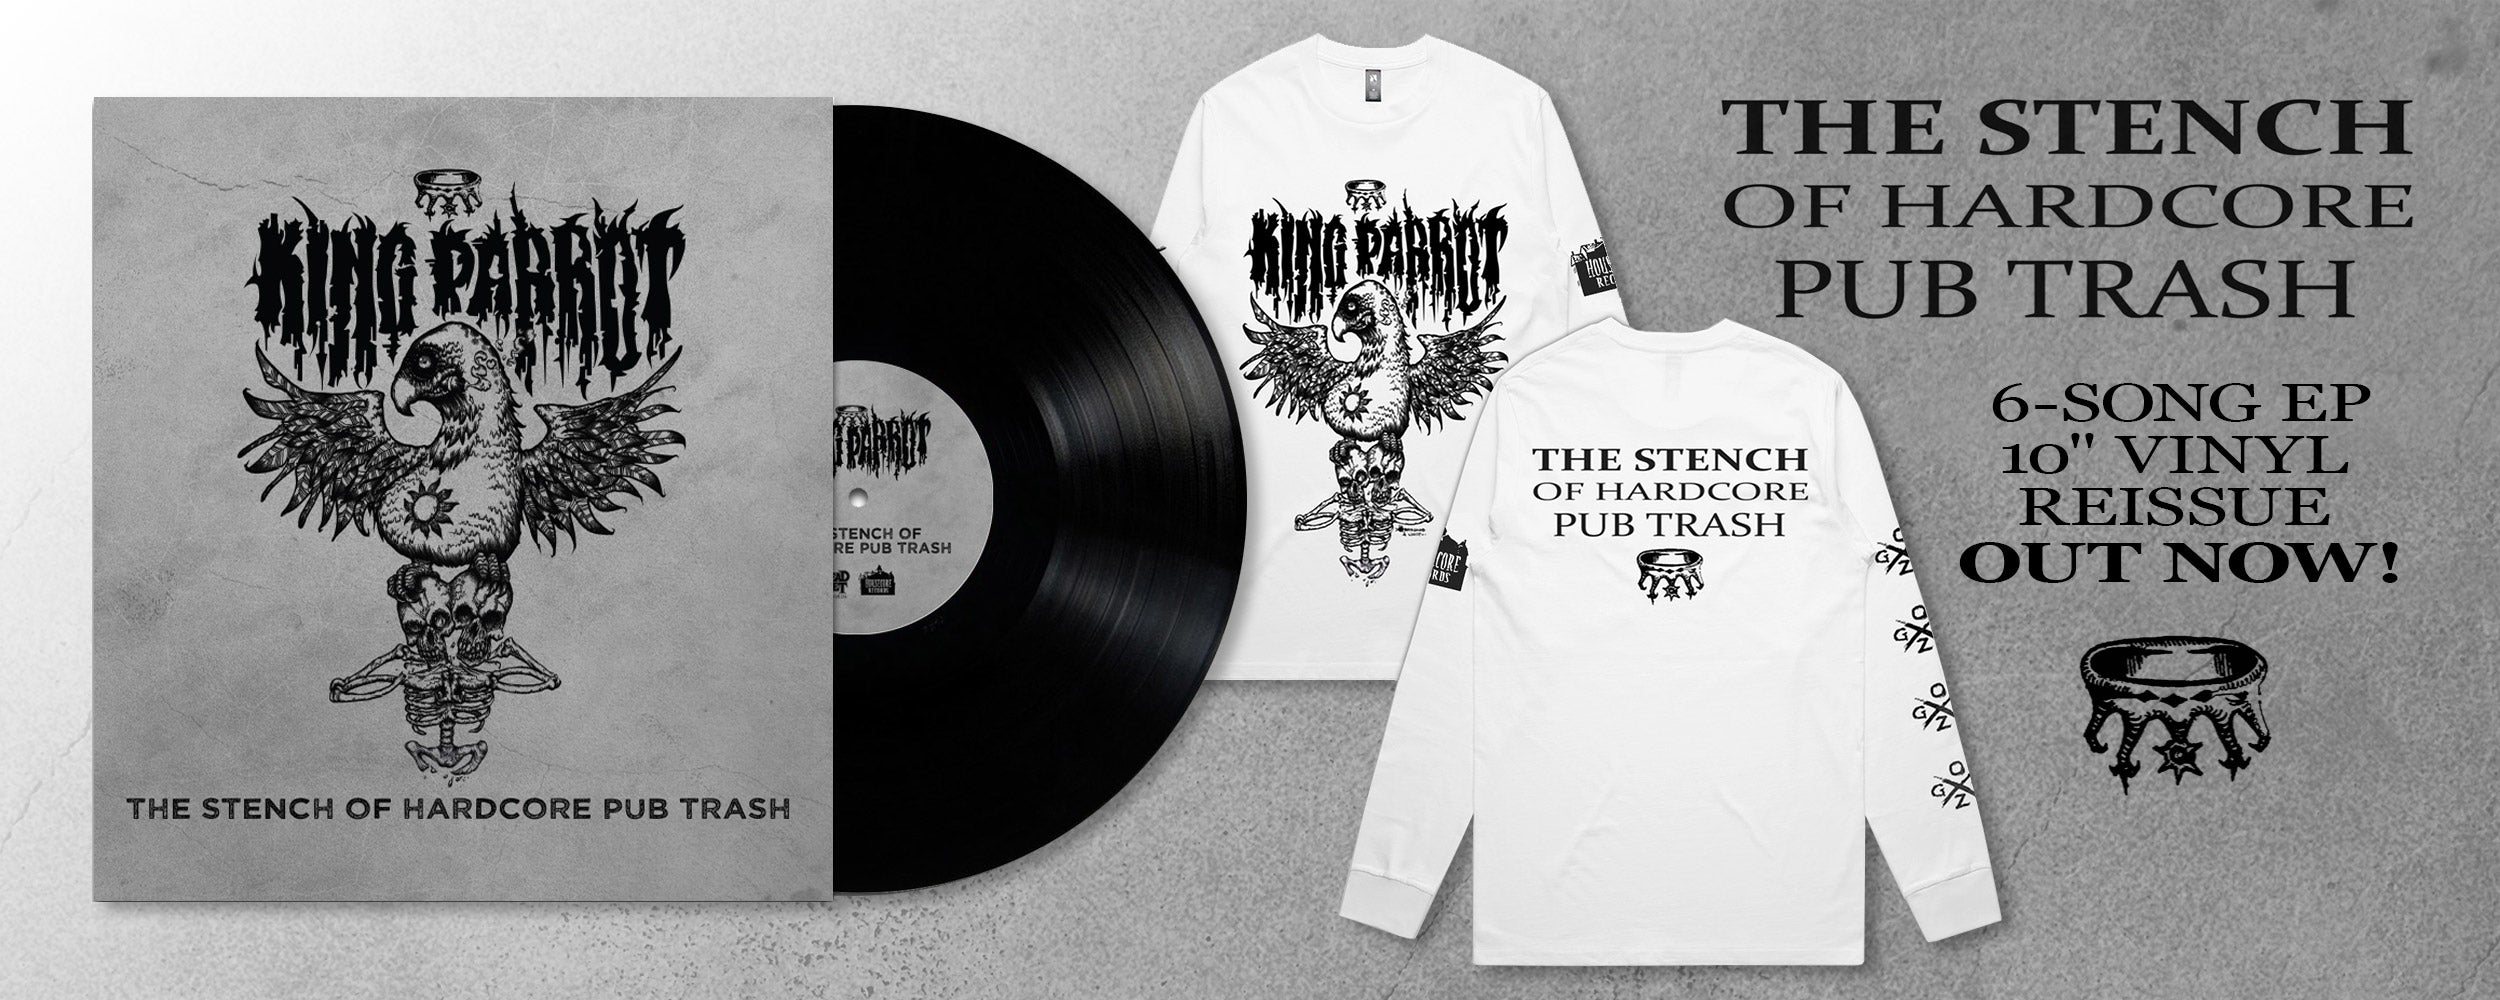 King Parrot: "The Stench of Hardcore Pub Trash" 10" Vinyl Reissue